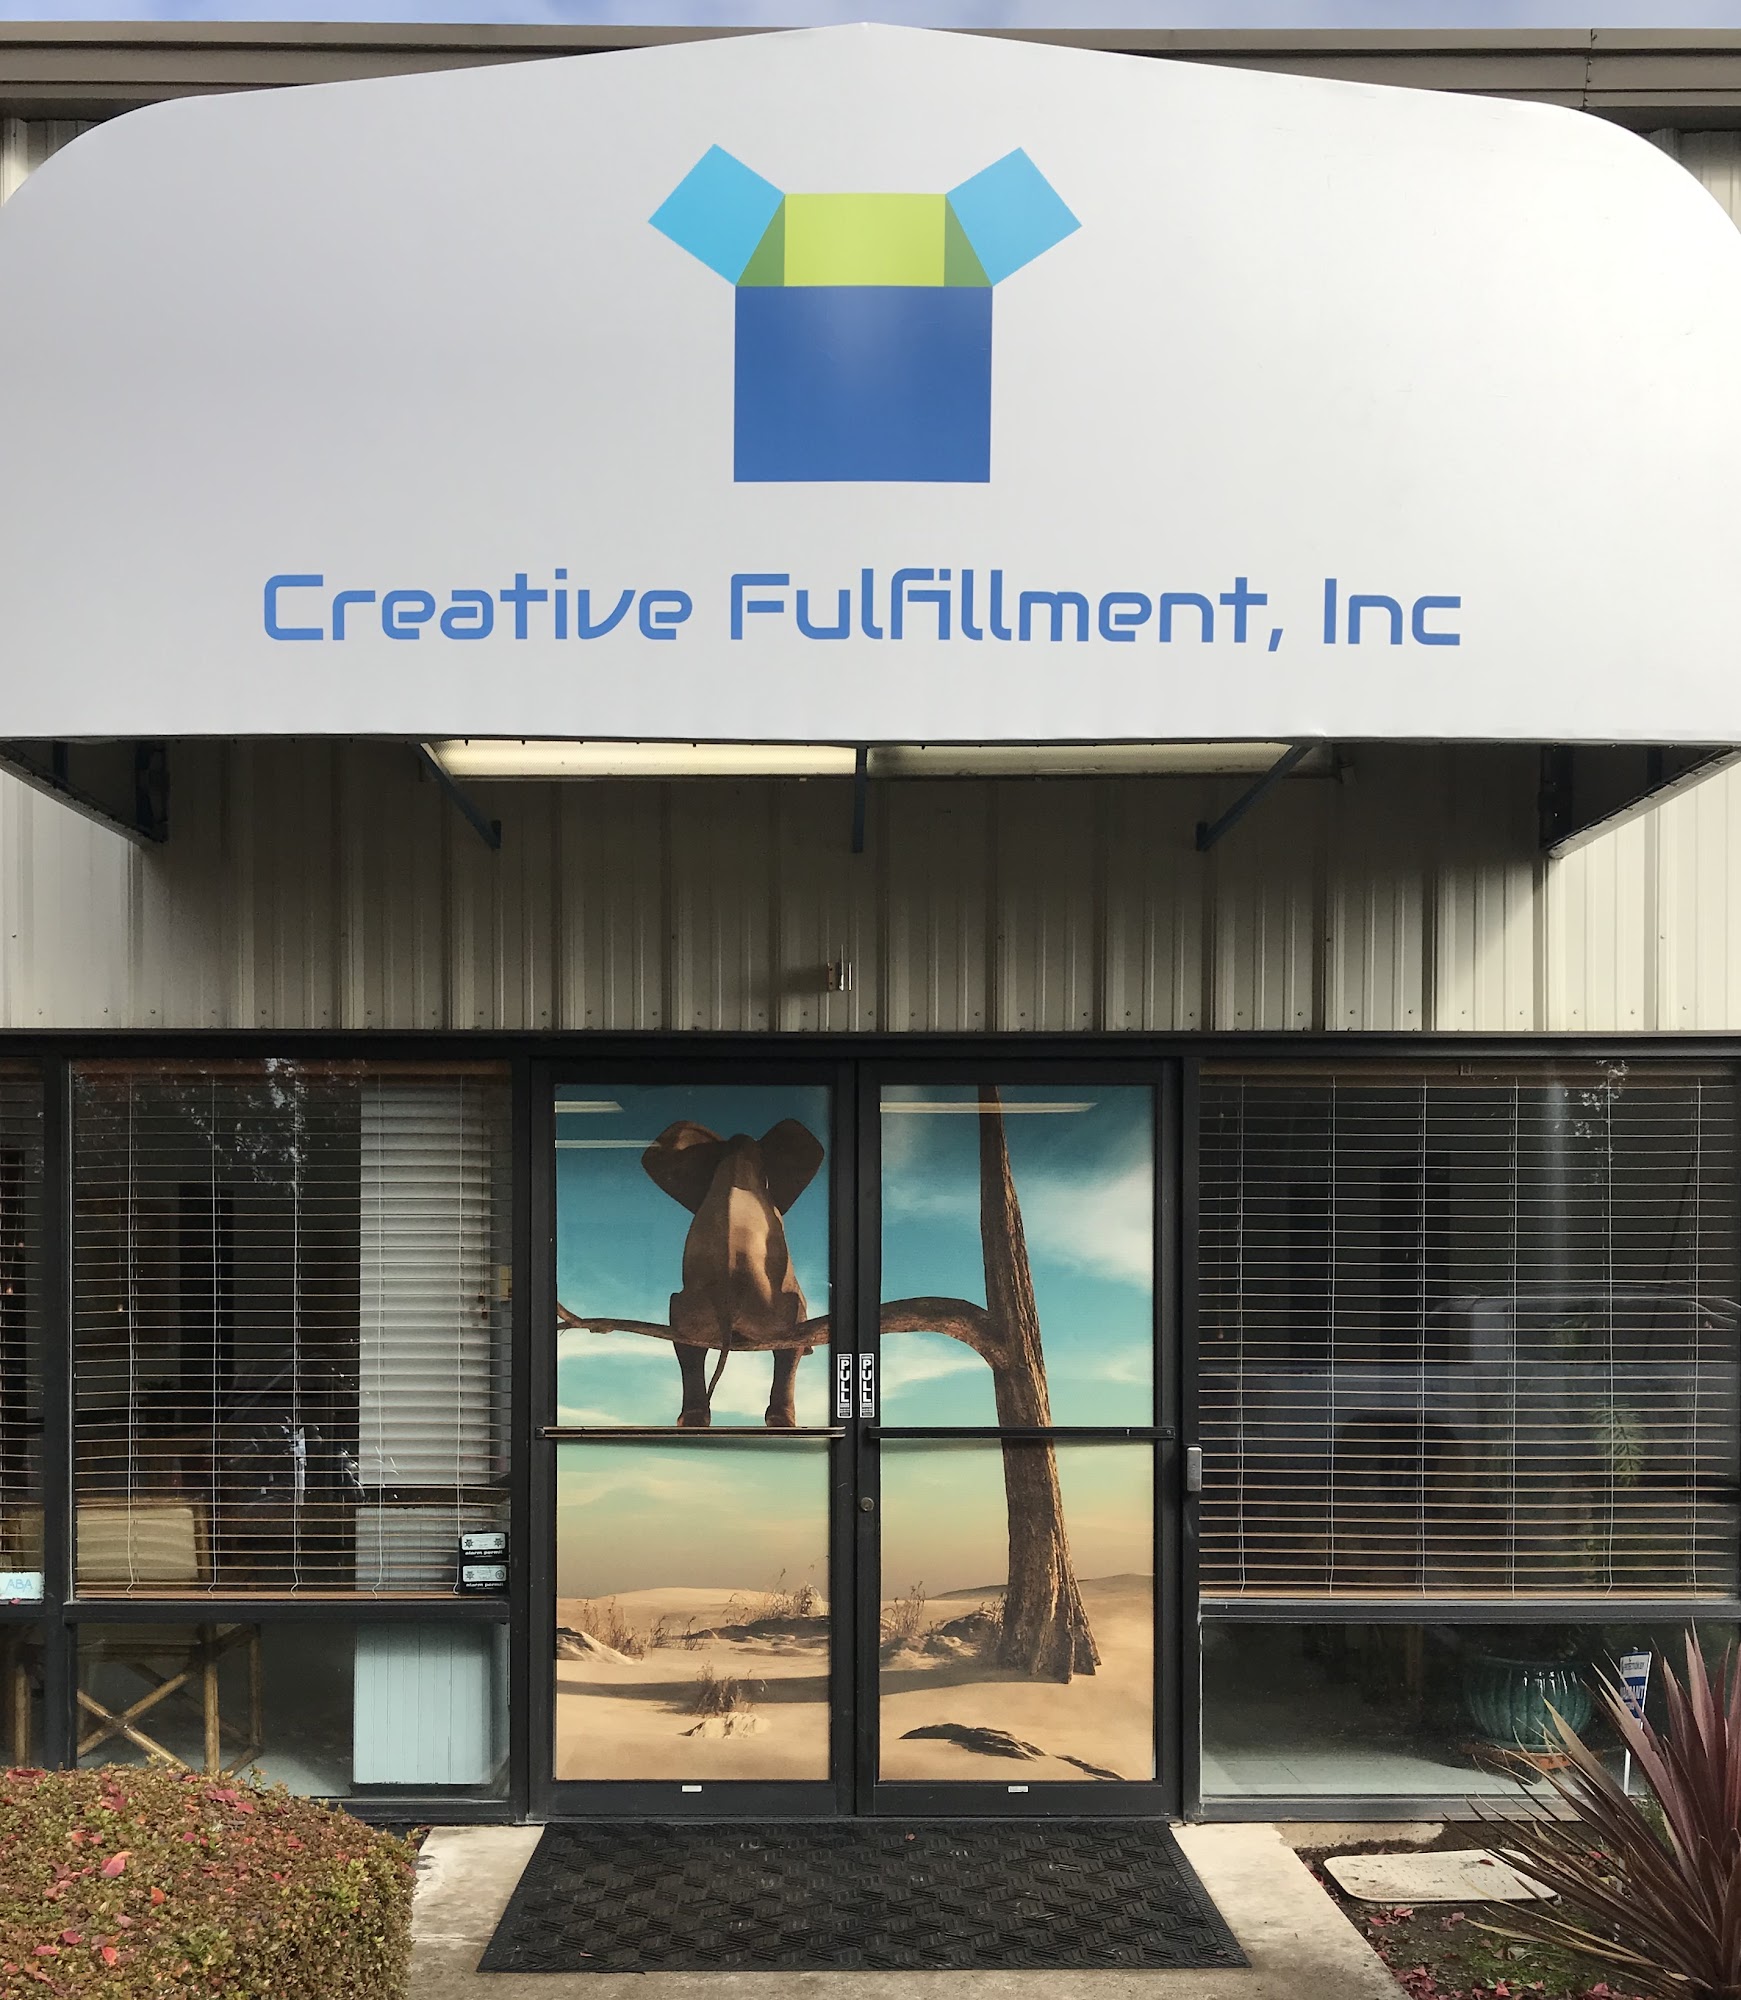 Creative Fulfillment, Inc